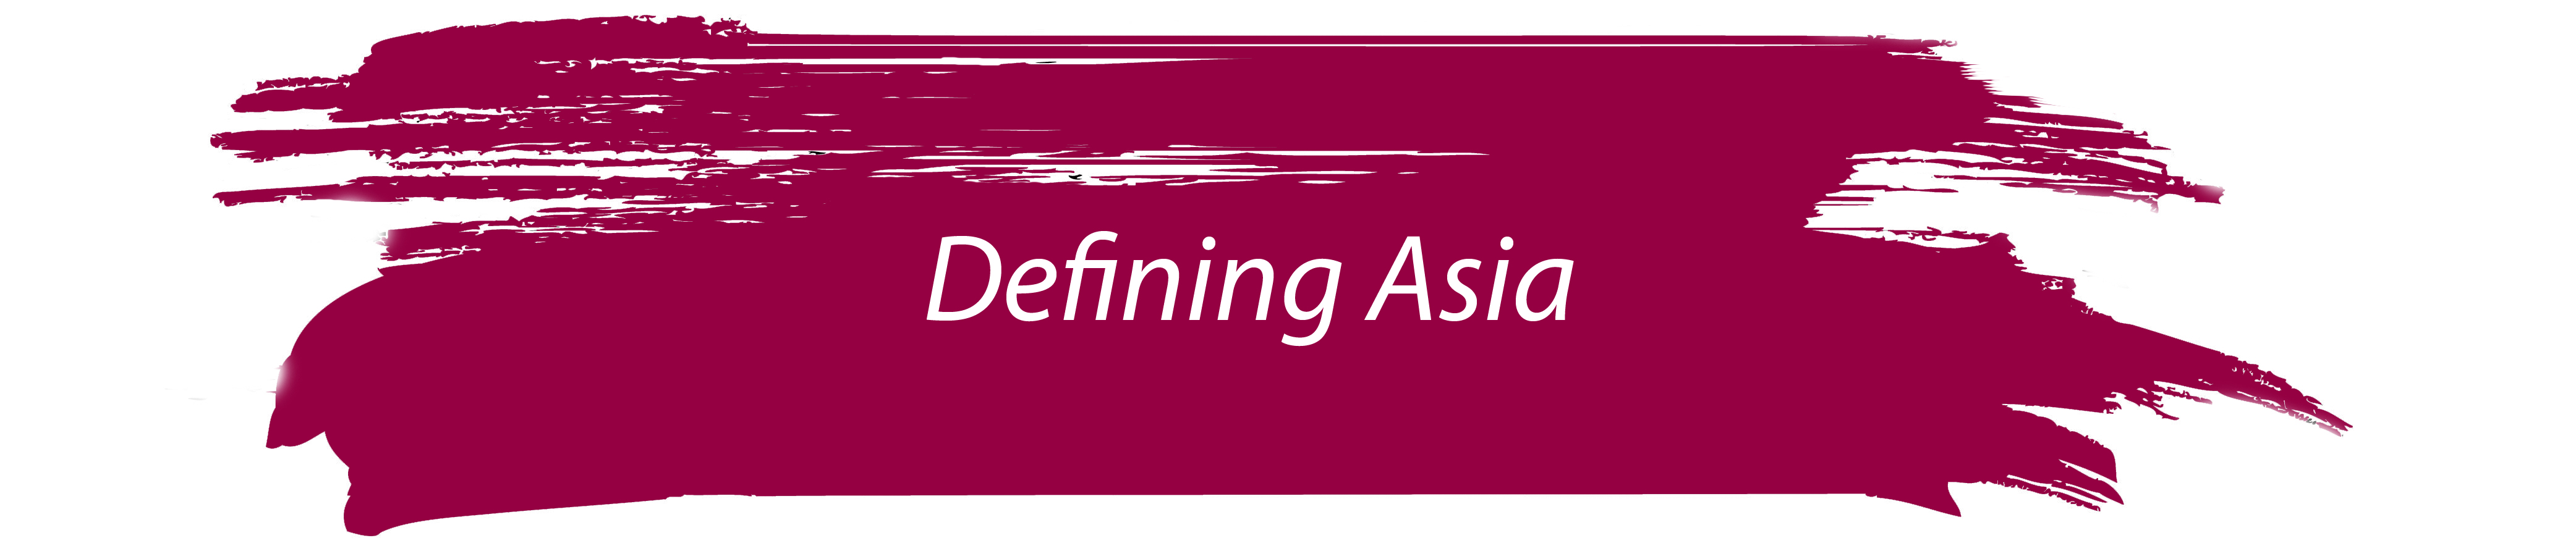 Defining Asia